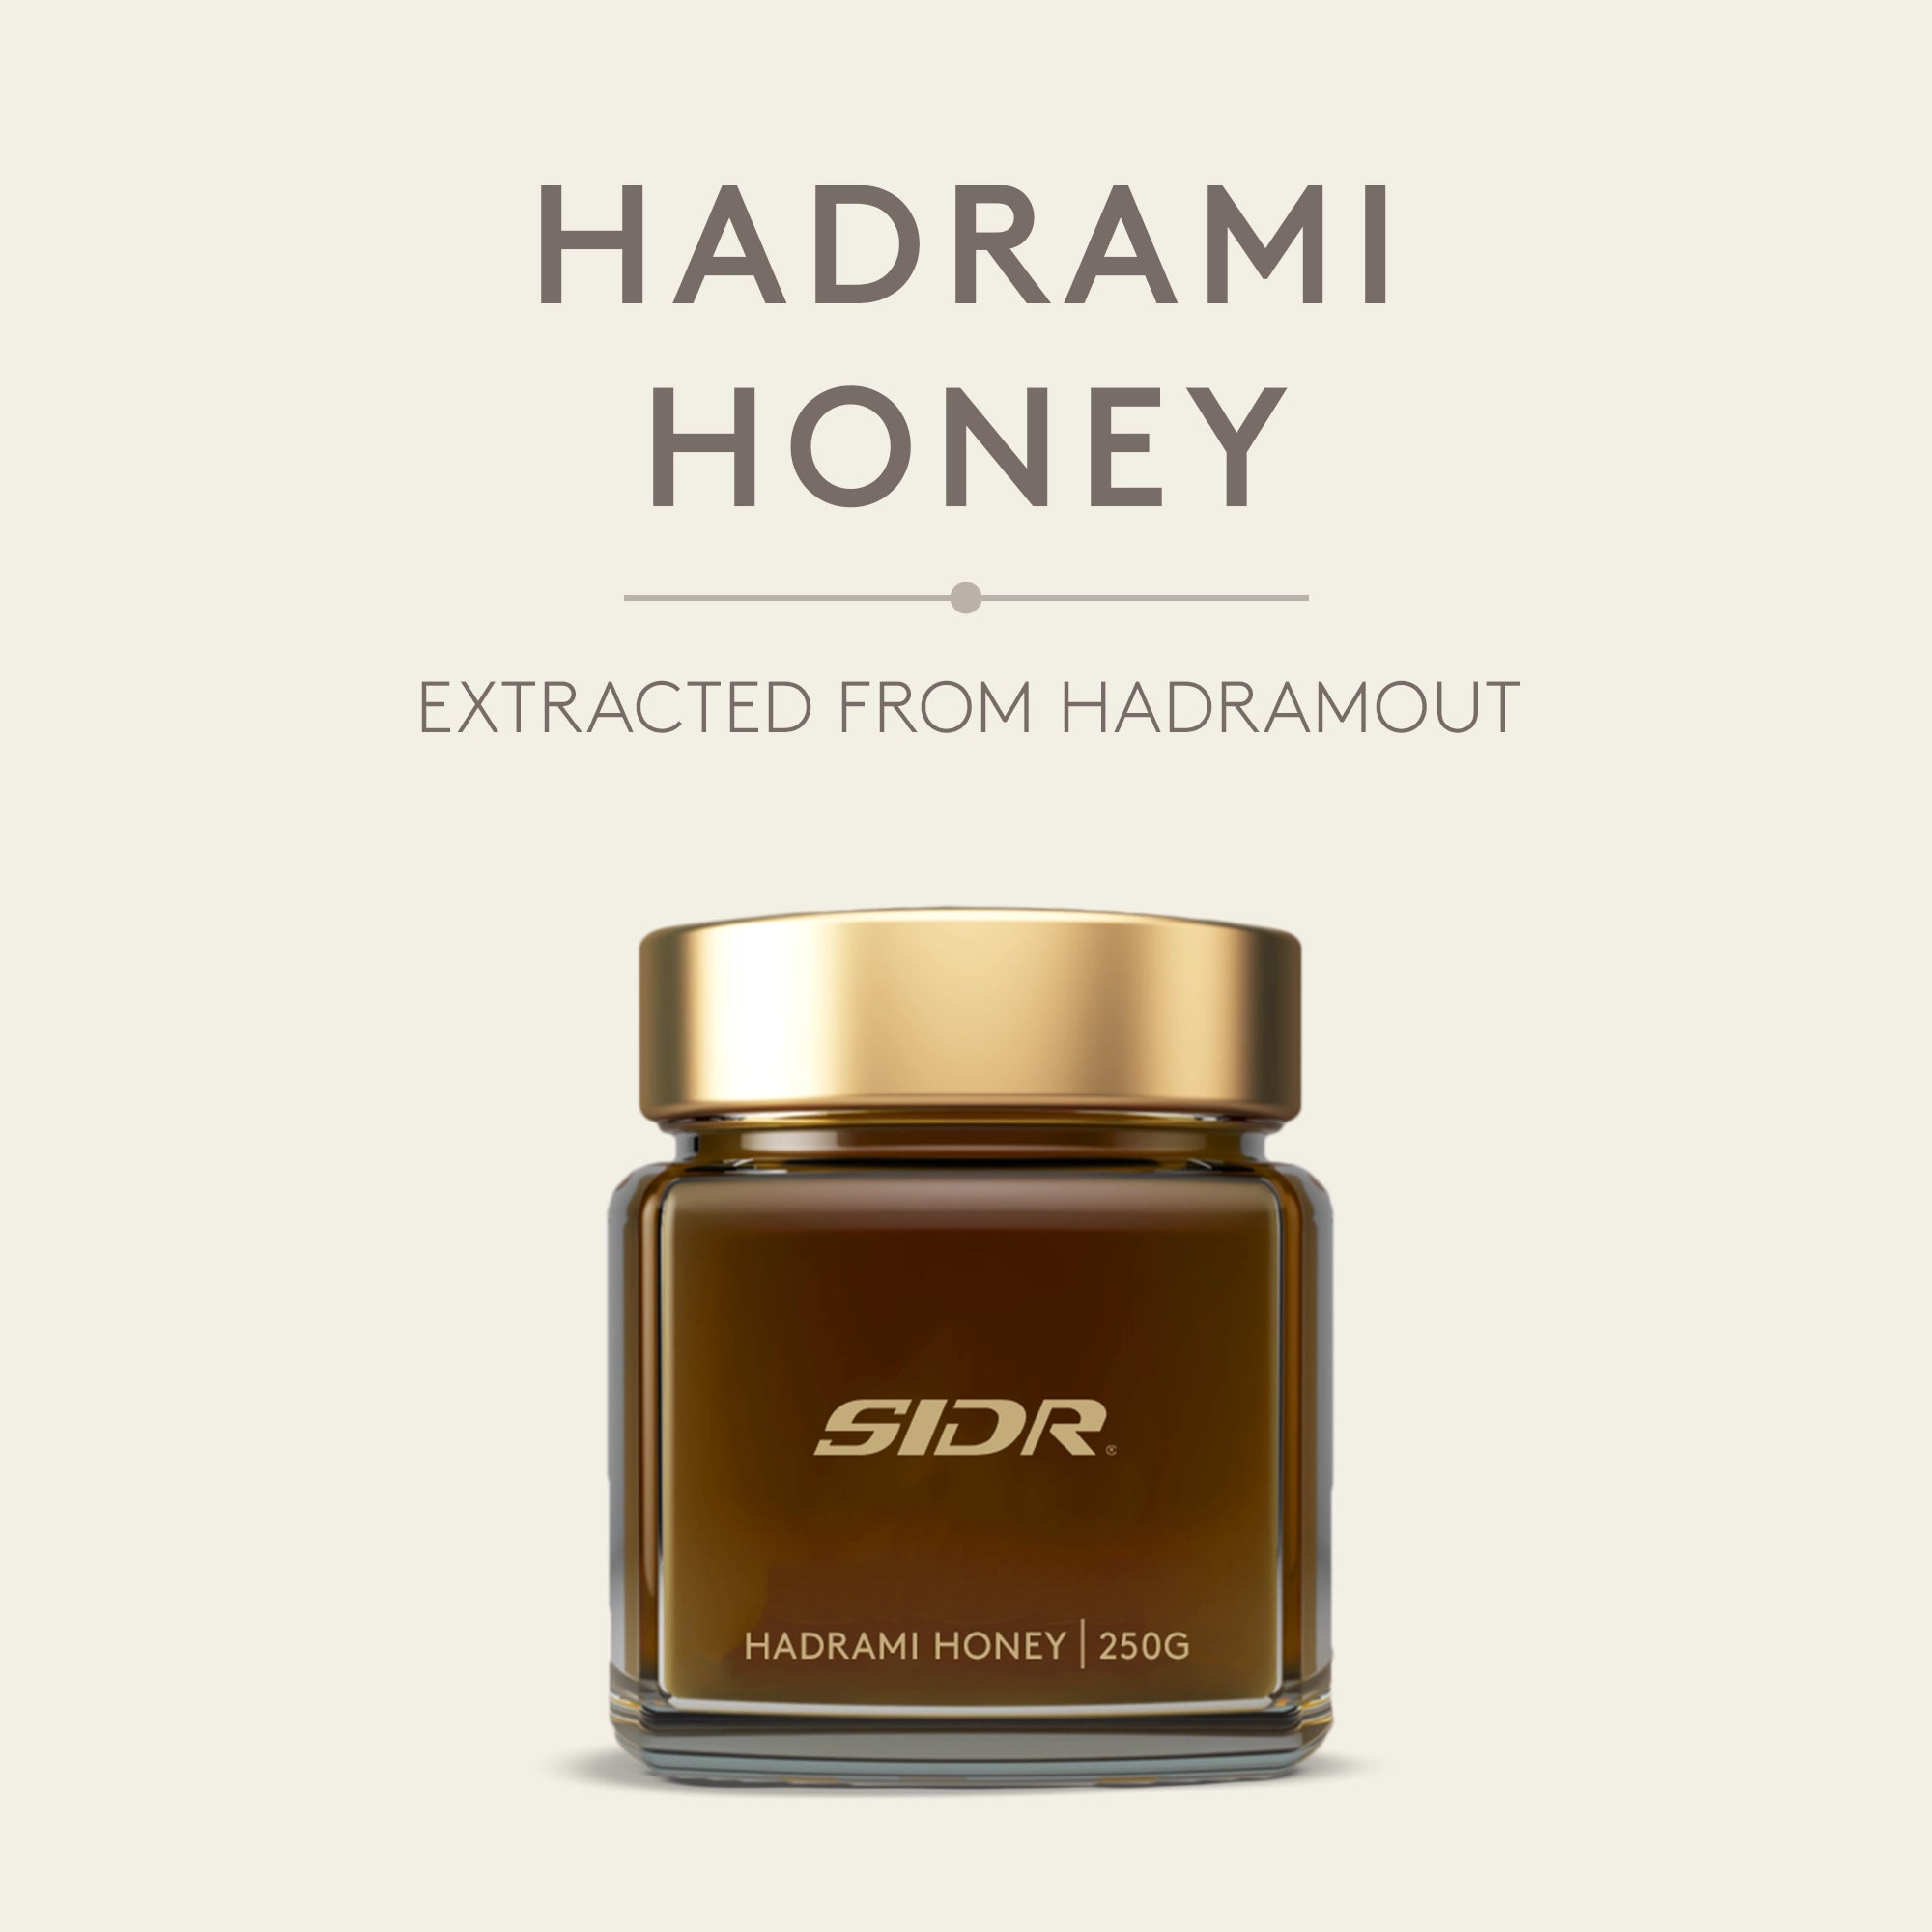 sidr hadrami honey from hadramout